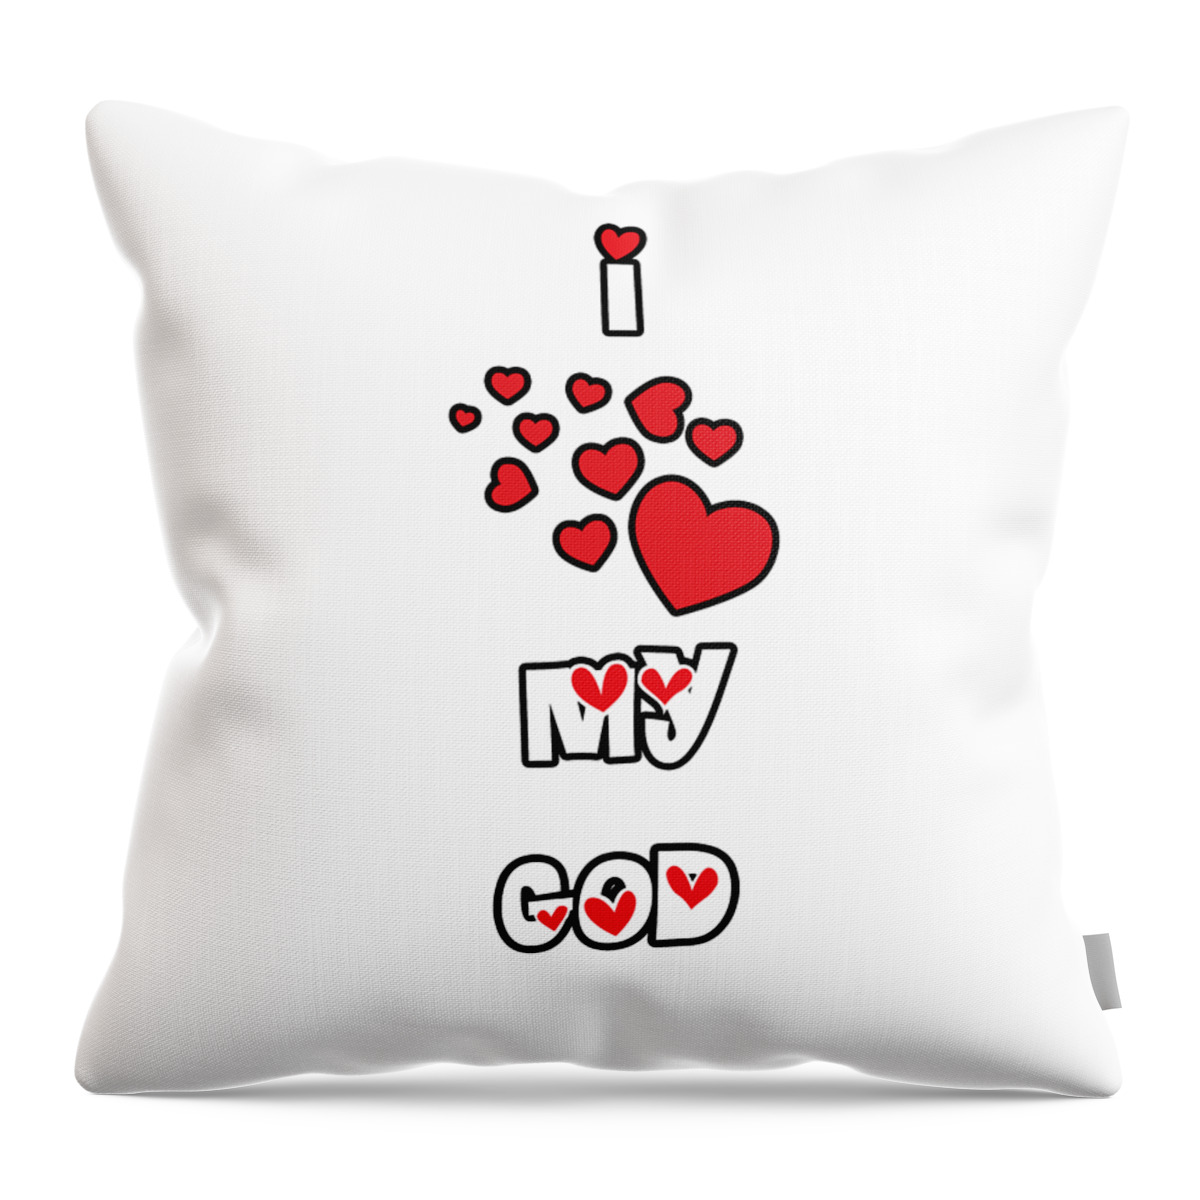 God Throw Pillow featuring the digital art I Love My God by Judy Hall-Folde